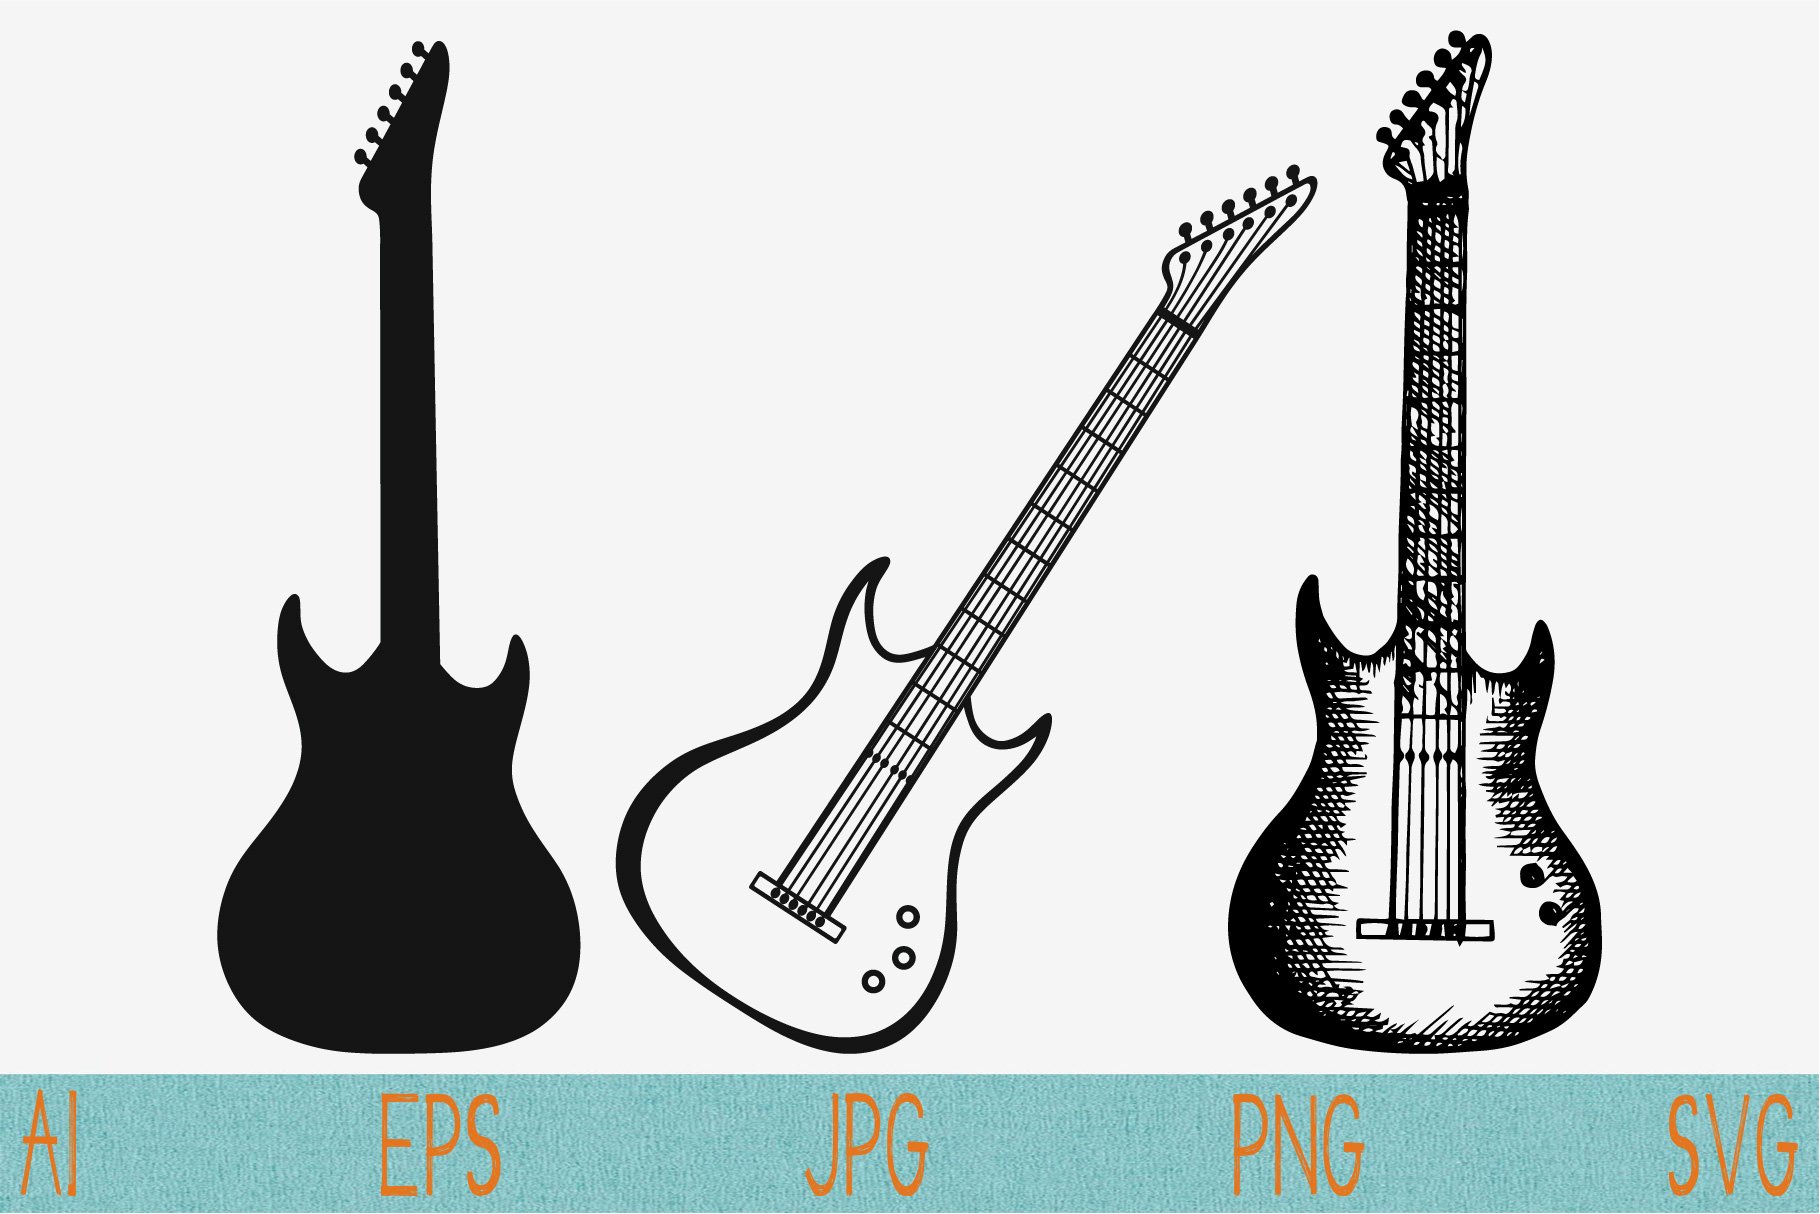 Three guitars options.